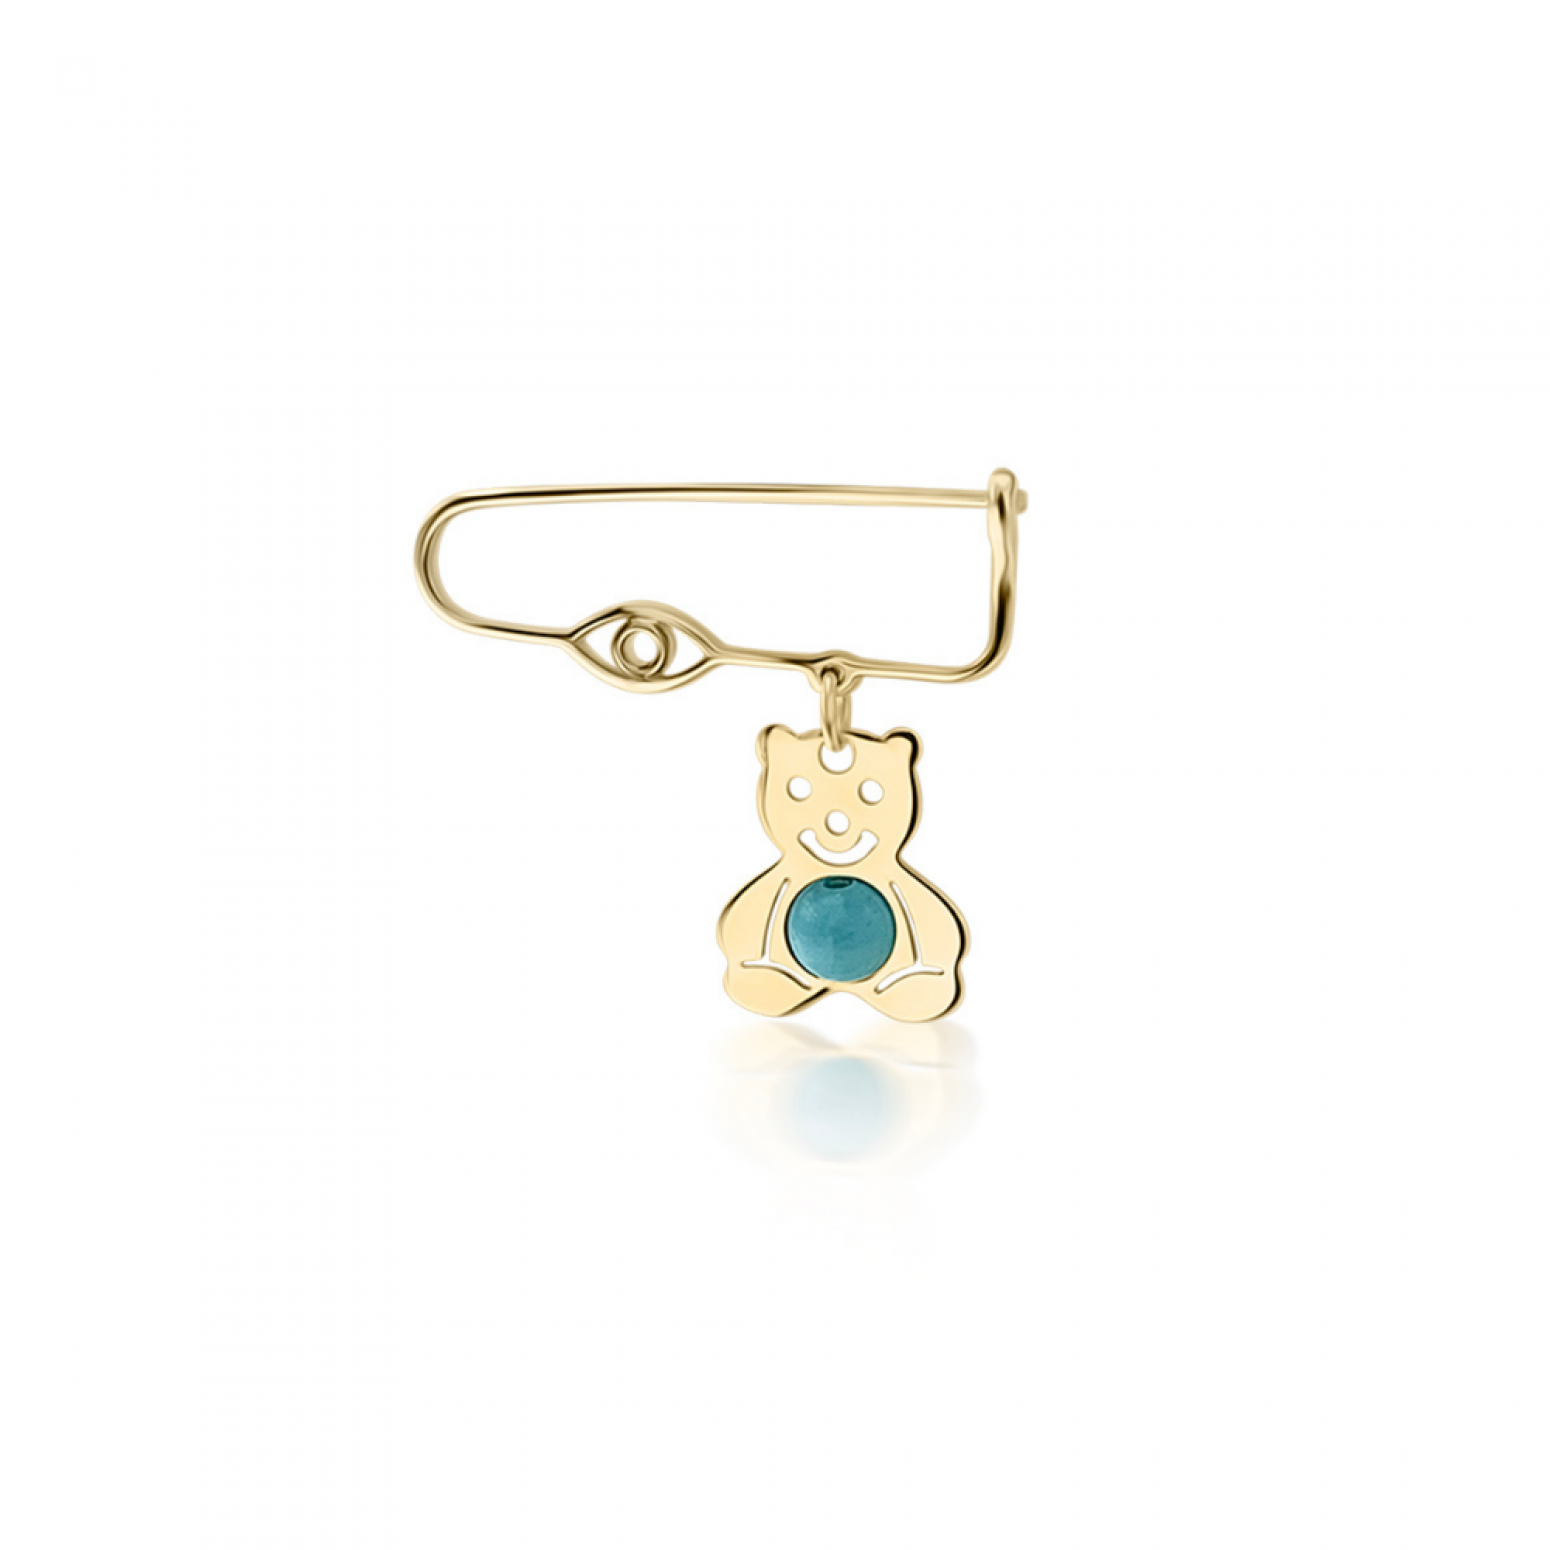 Babies pin K14 gold with bear, eye and turquoise pf0135 BABIES Κοσμηματα - chrilia.gr